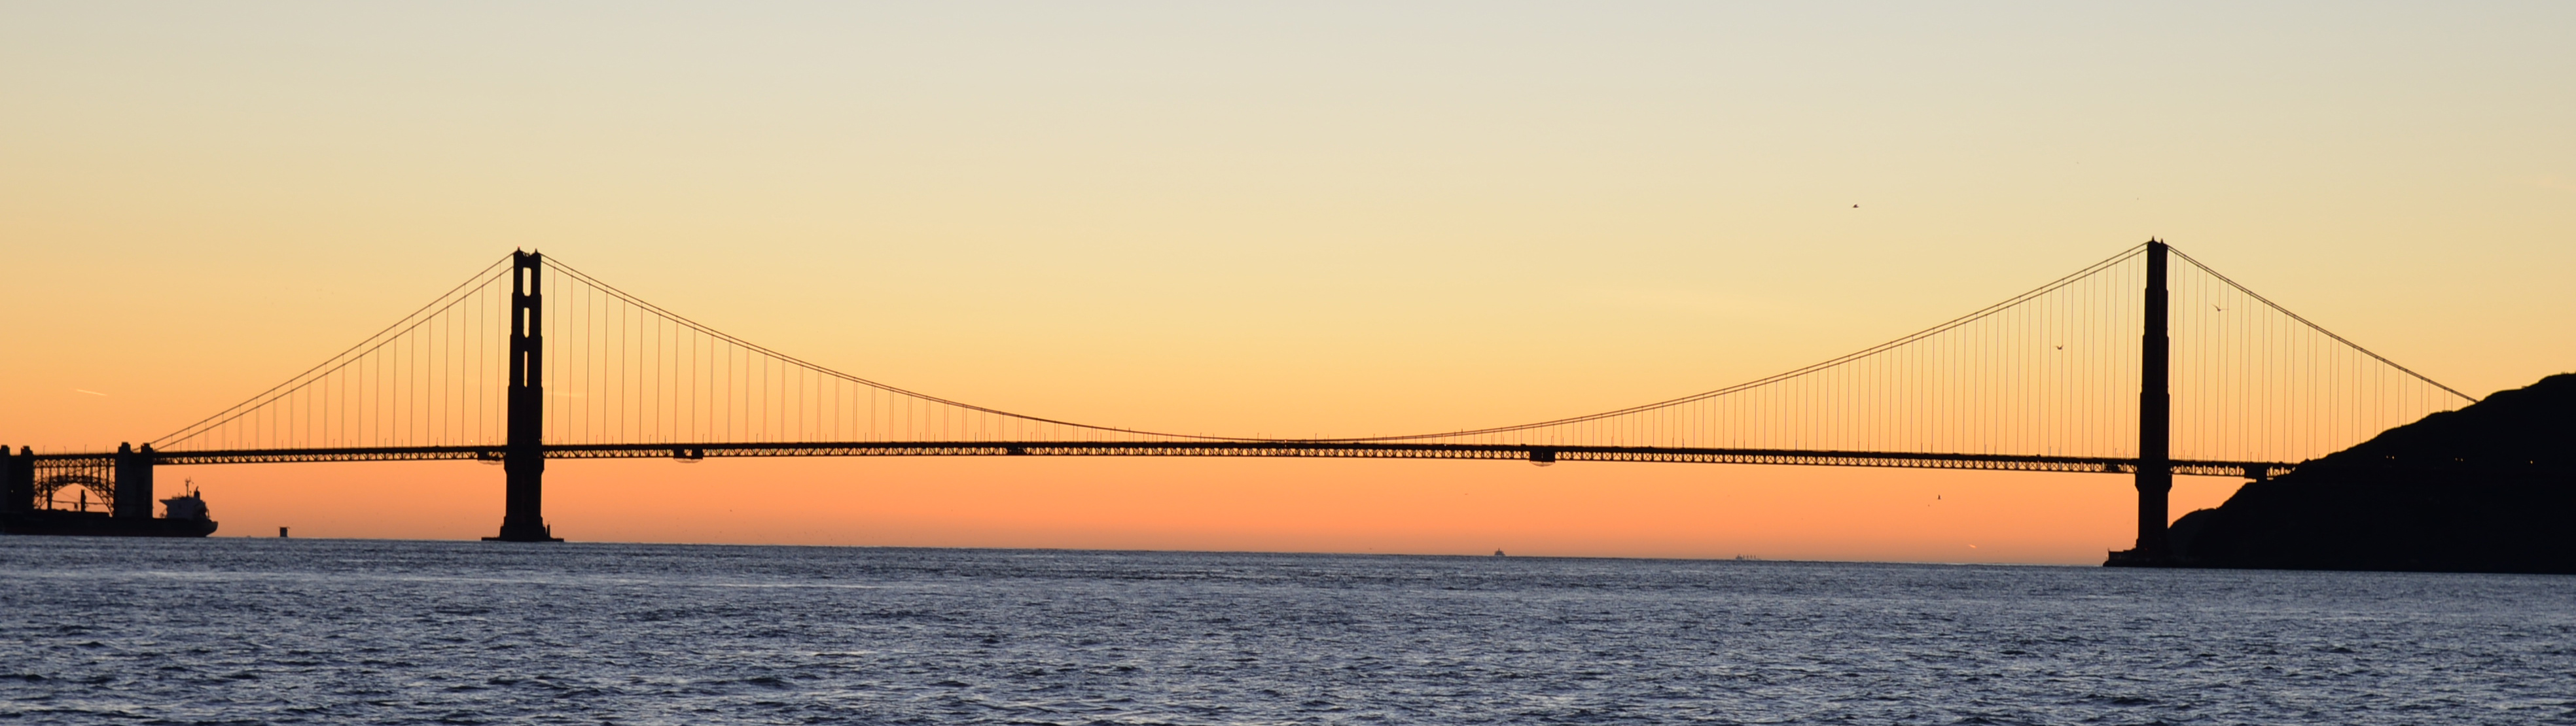 File:Golden Gate Bridge Dec 15 2015 by D Ramey Logan.jpg - Wikimedia ...